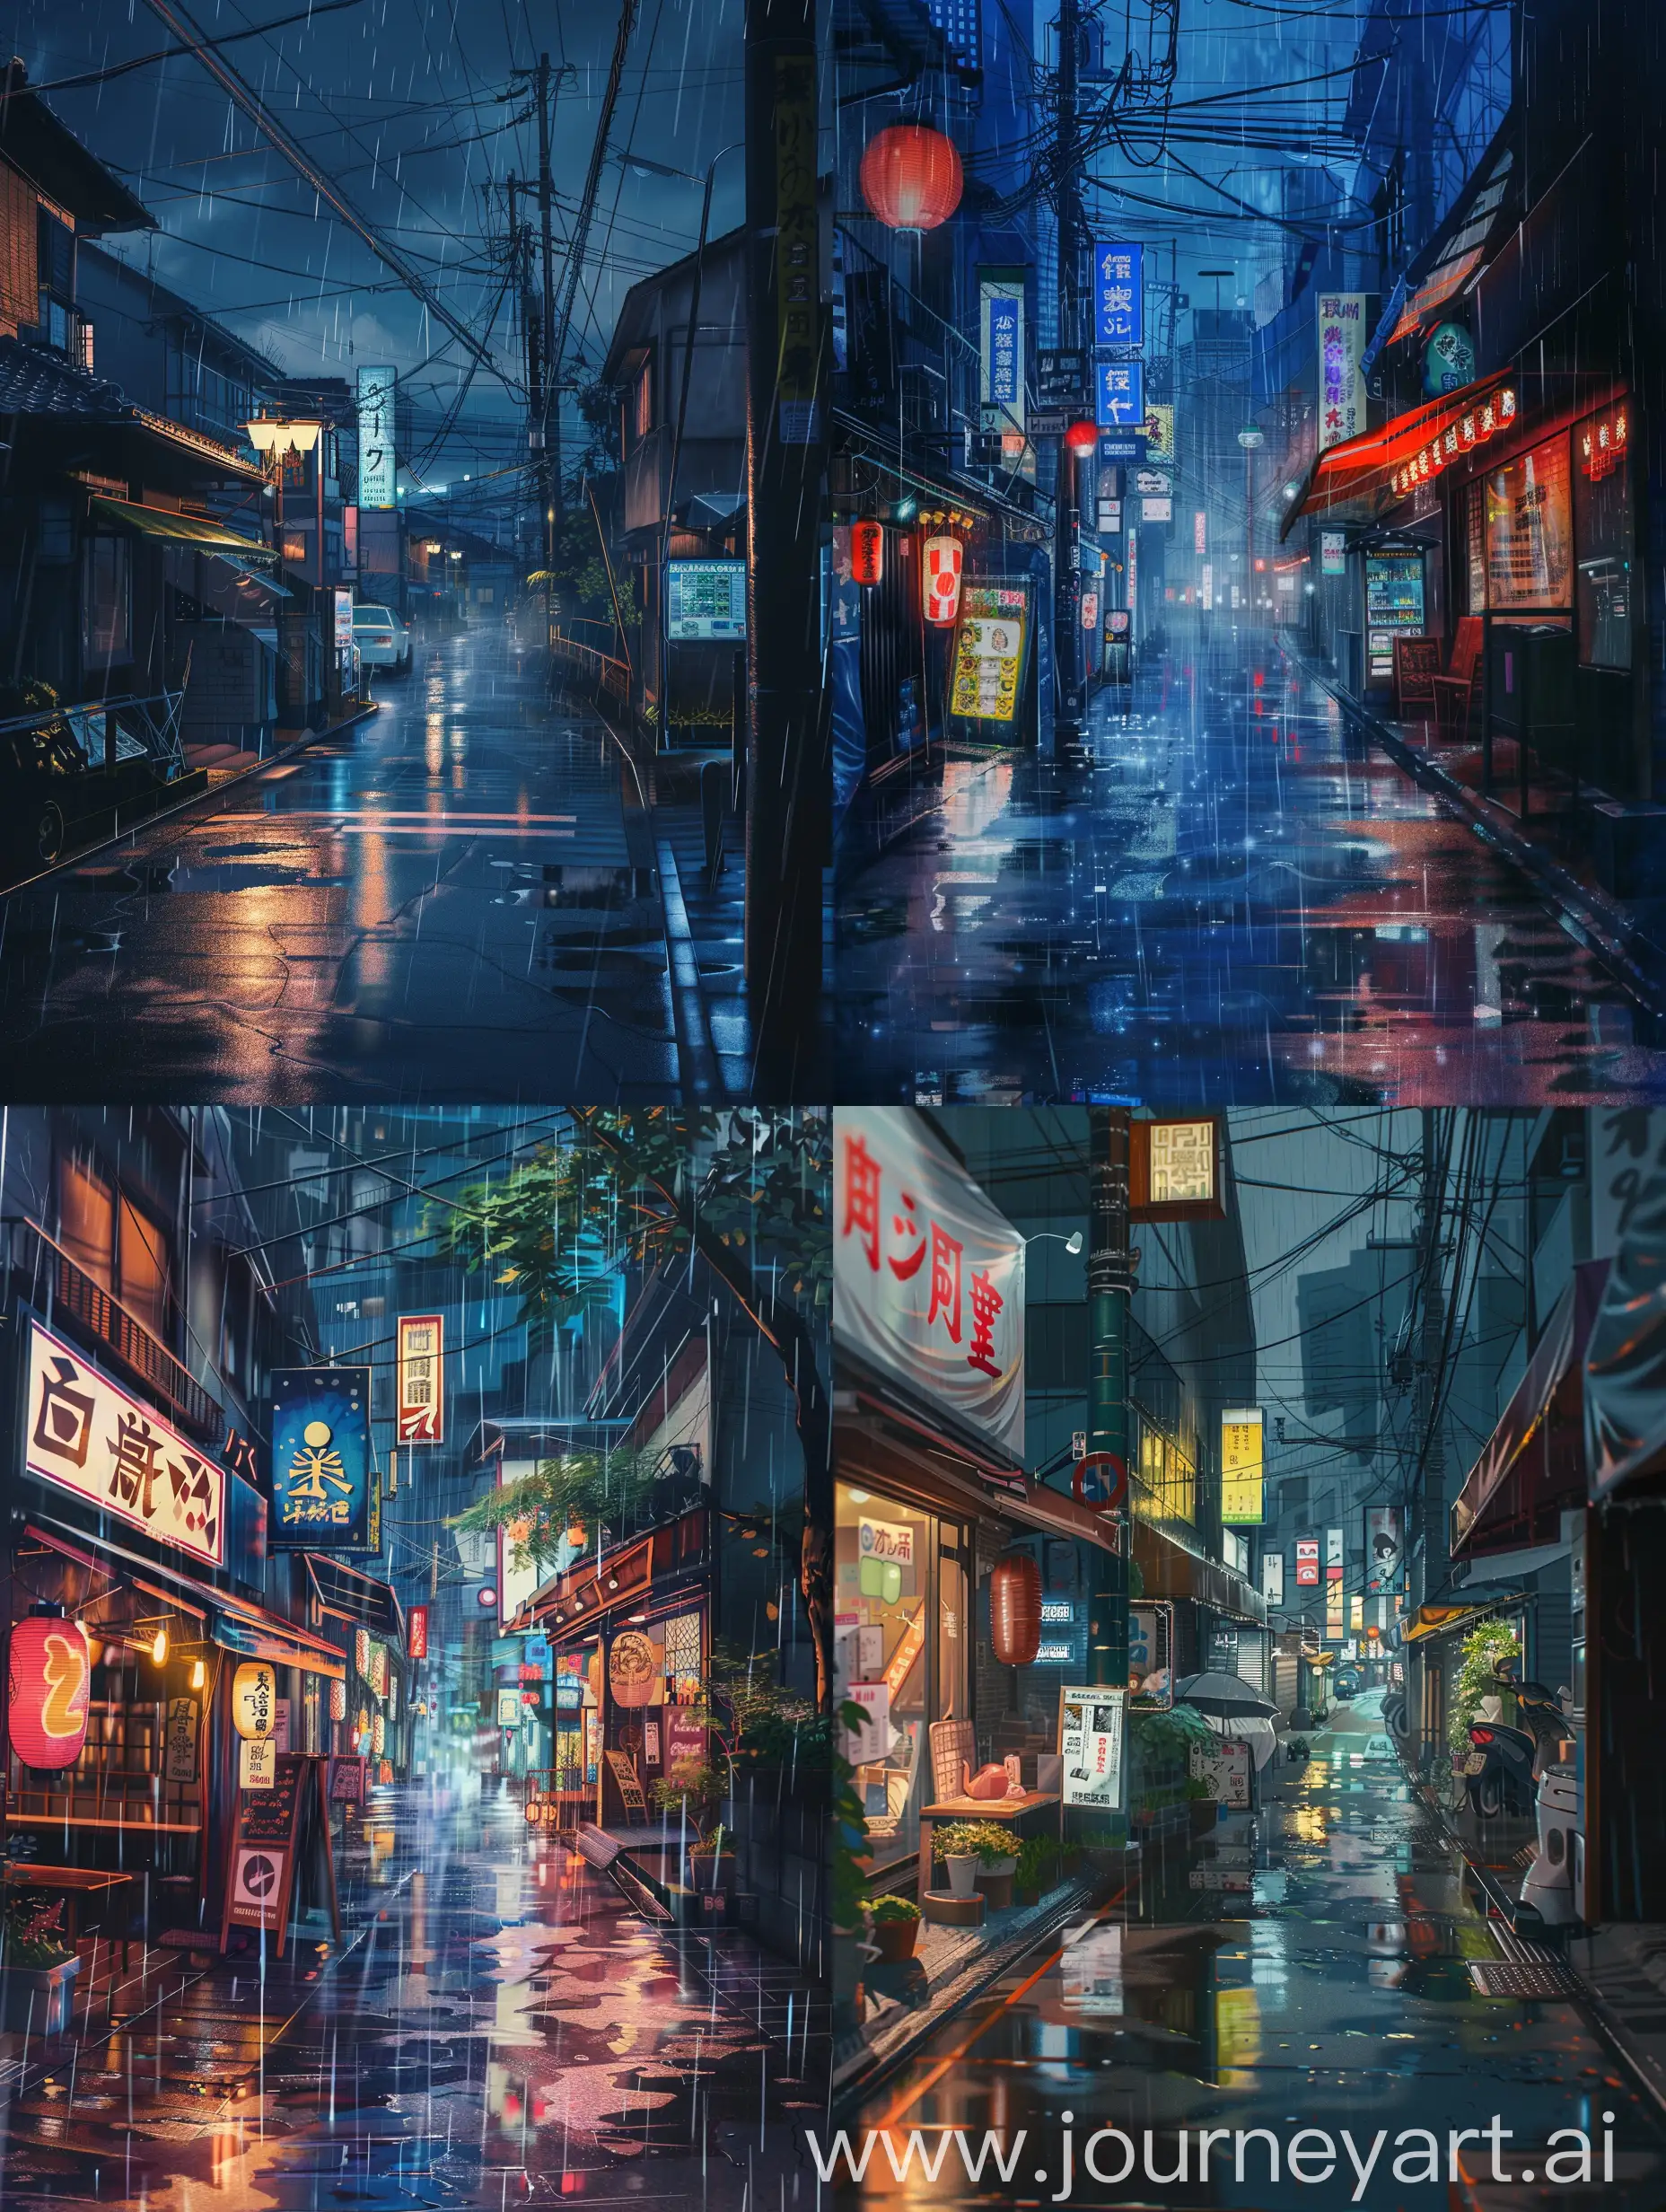 Rain, street, Japan, empty place, anime style.